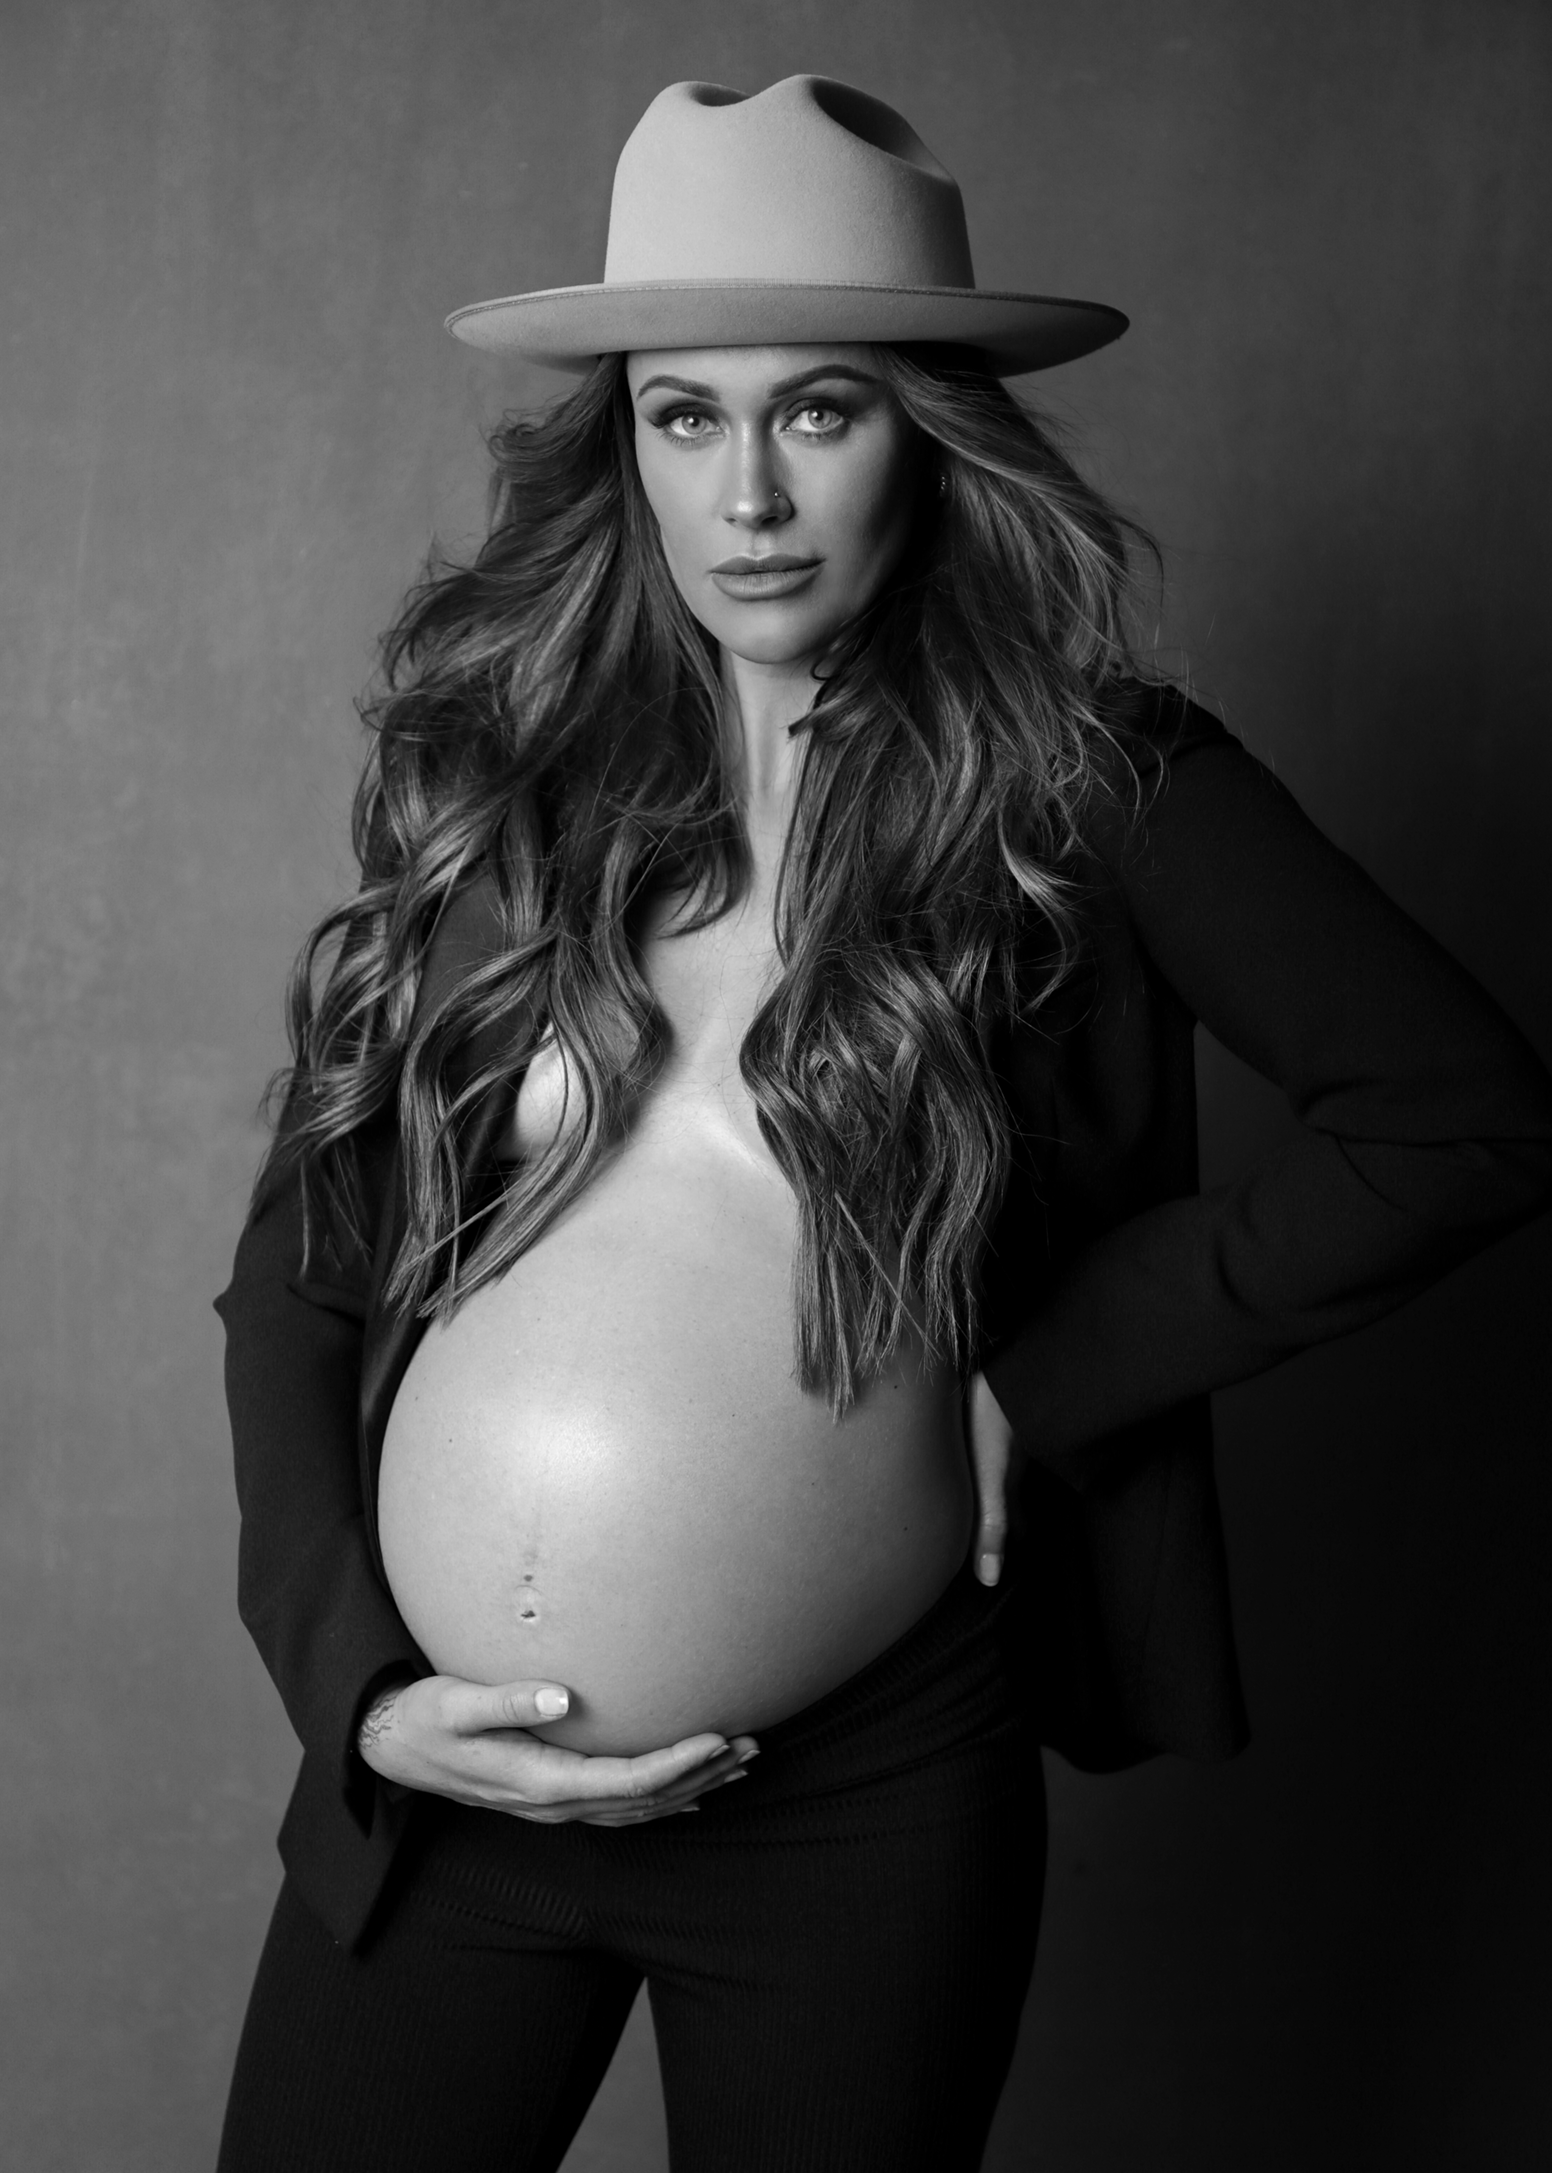 Luela Kaba Photography | Maternity Photography | Newborn Photography | Boudoir Photography | Mom & Baby Photos